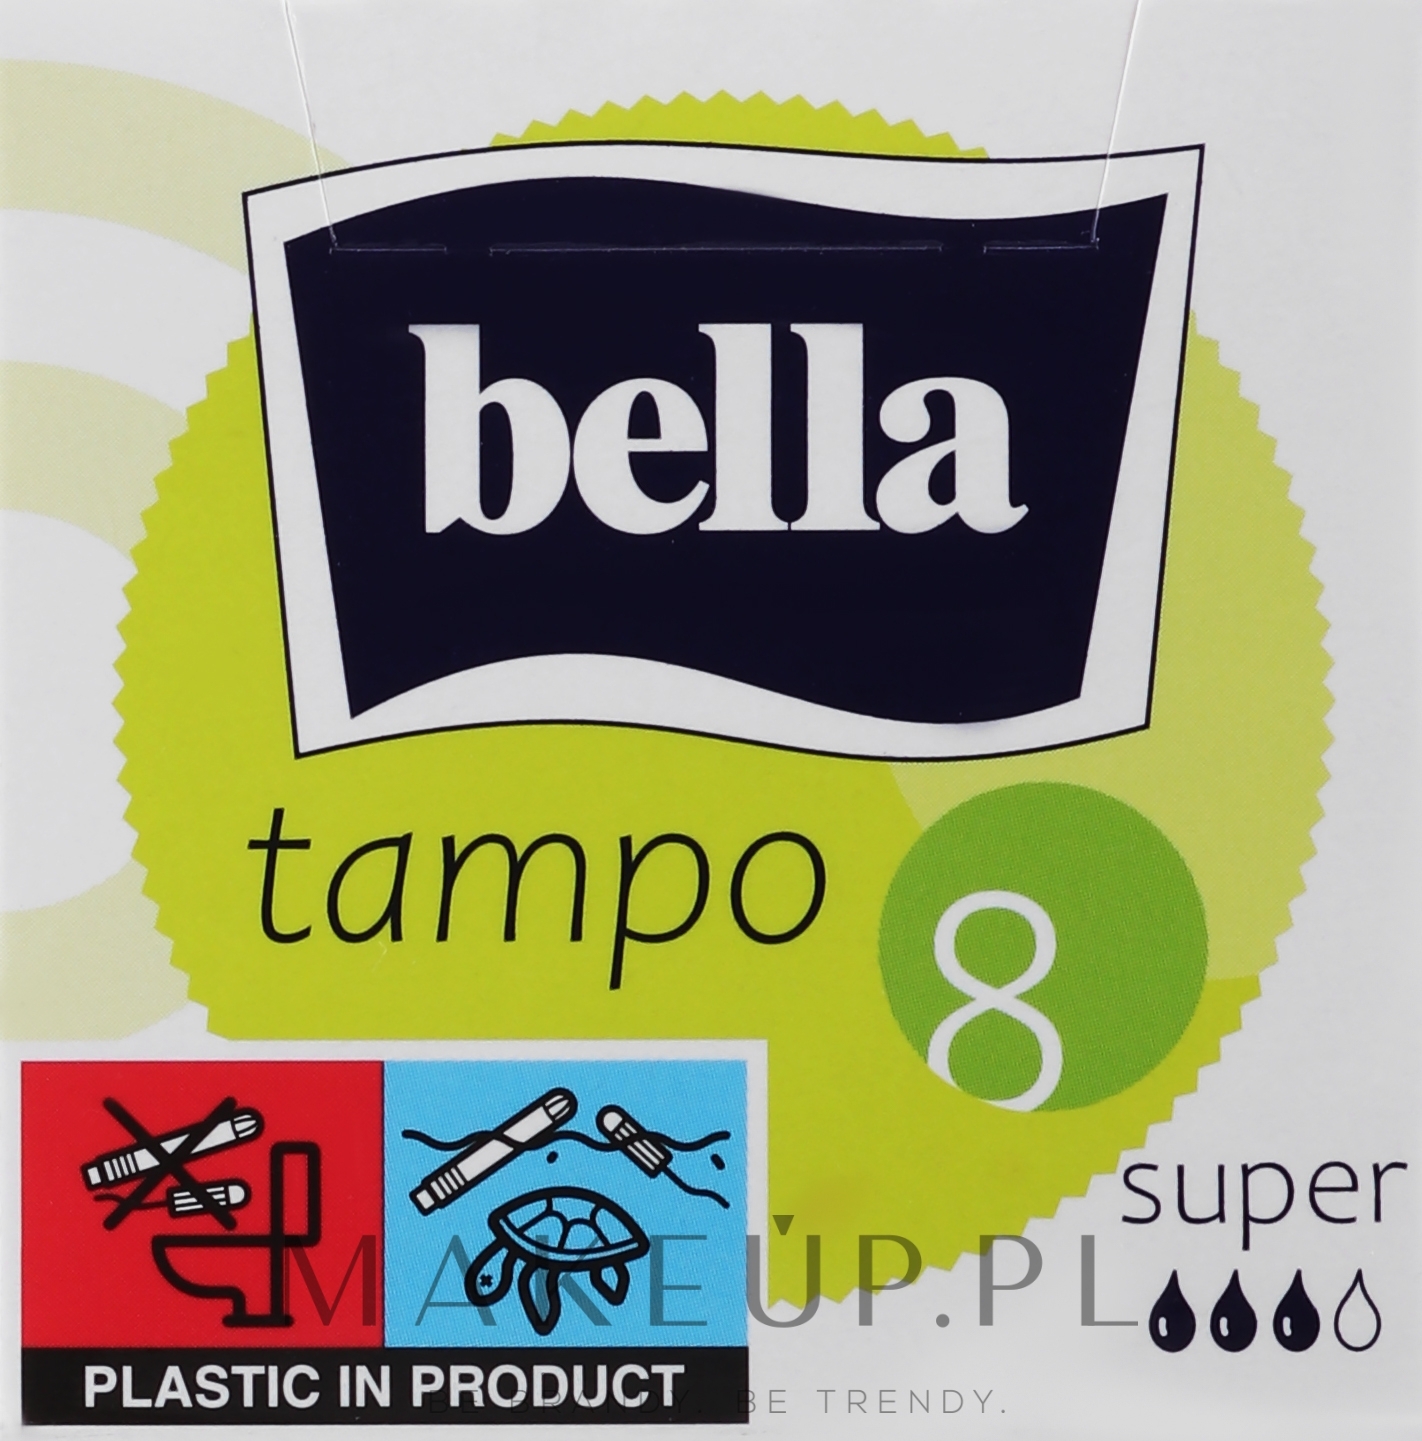 Tampony Tampo Premium Comfort Super, 8 szt. - Bella — Zdjęcie 8 szt.